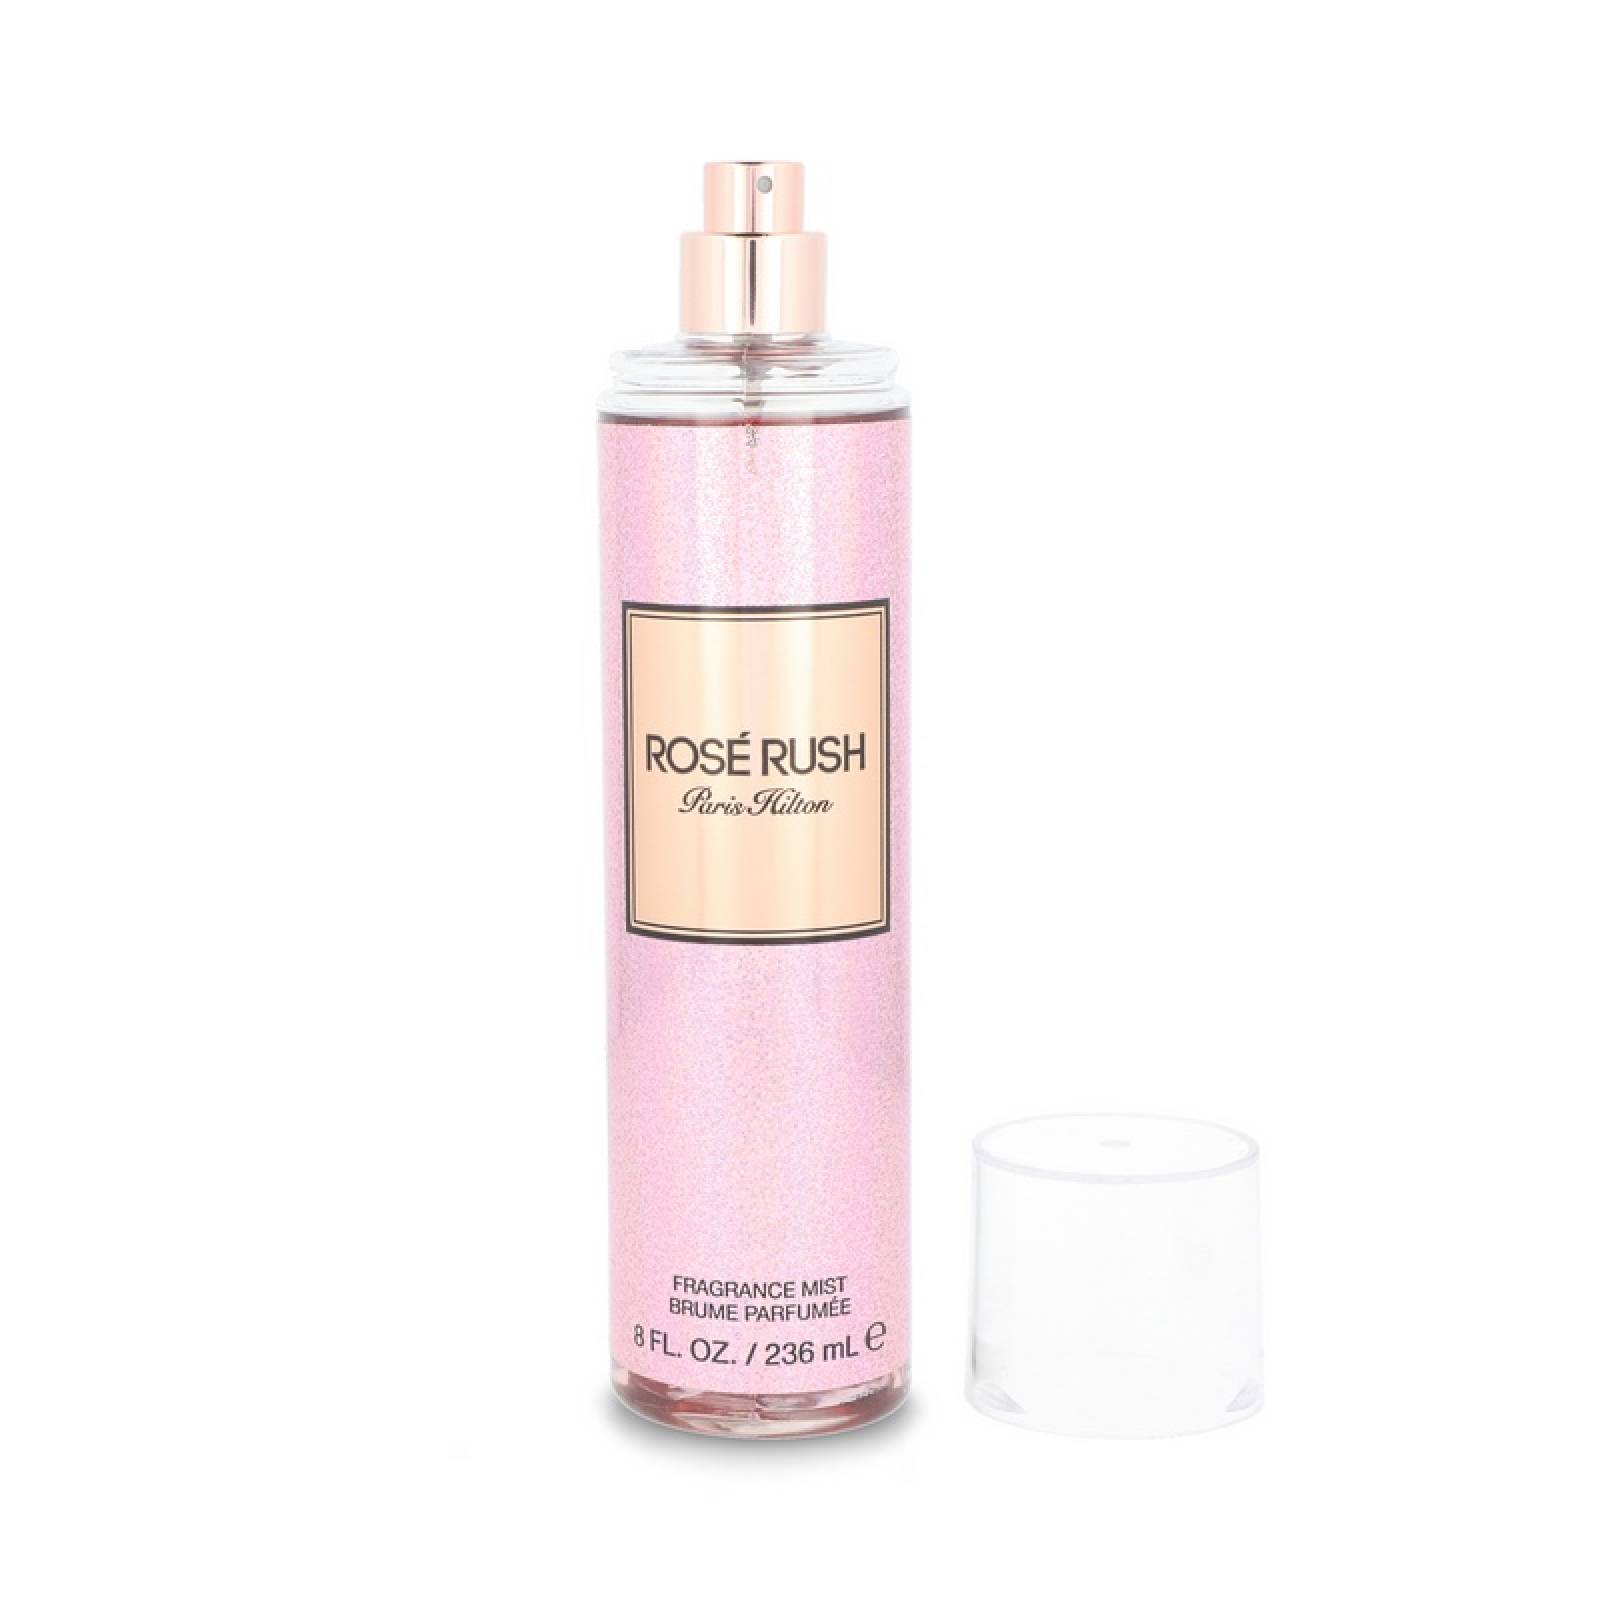 Perfume para Dama Rose Rush 236 ml Body Mist de Paris Hilton